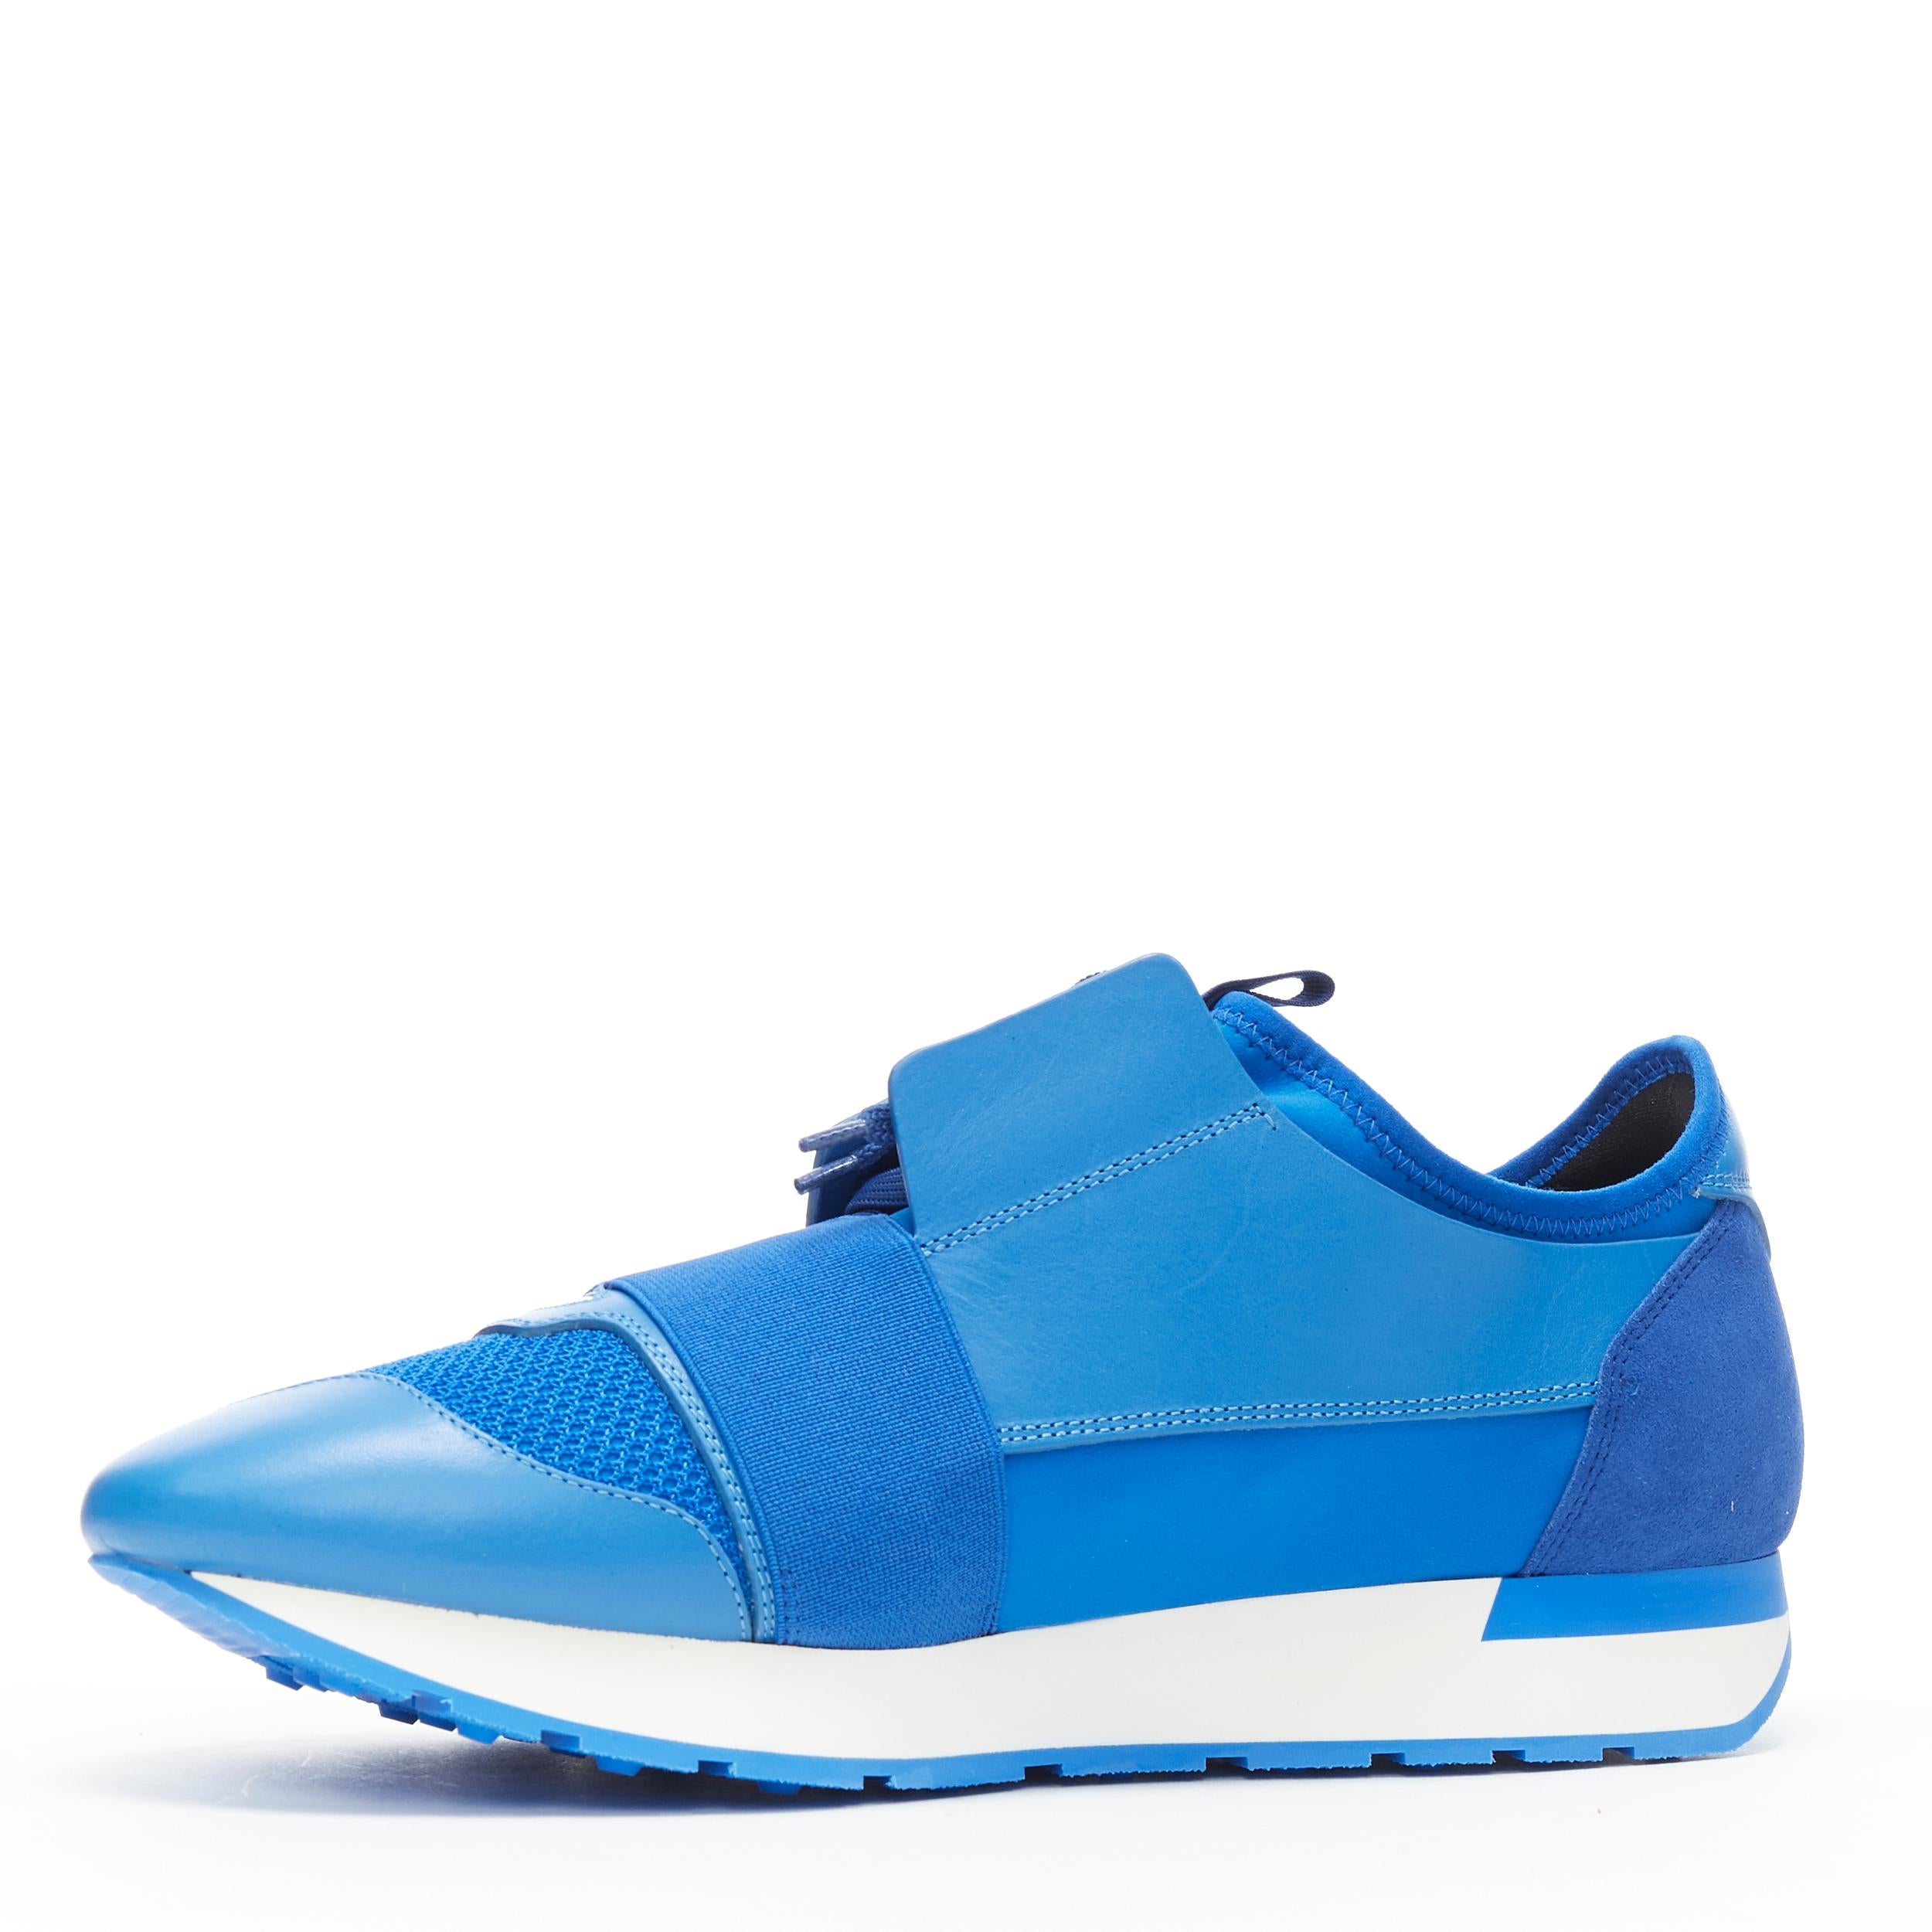 cobalt blue sneakers